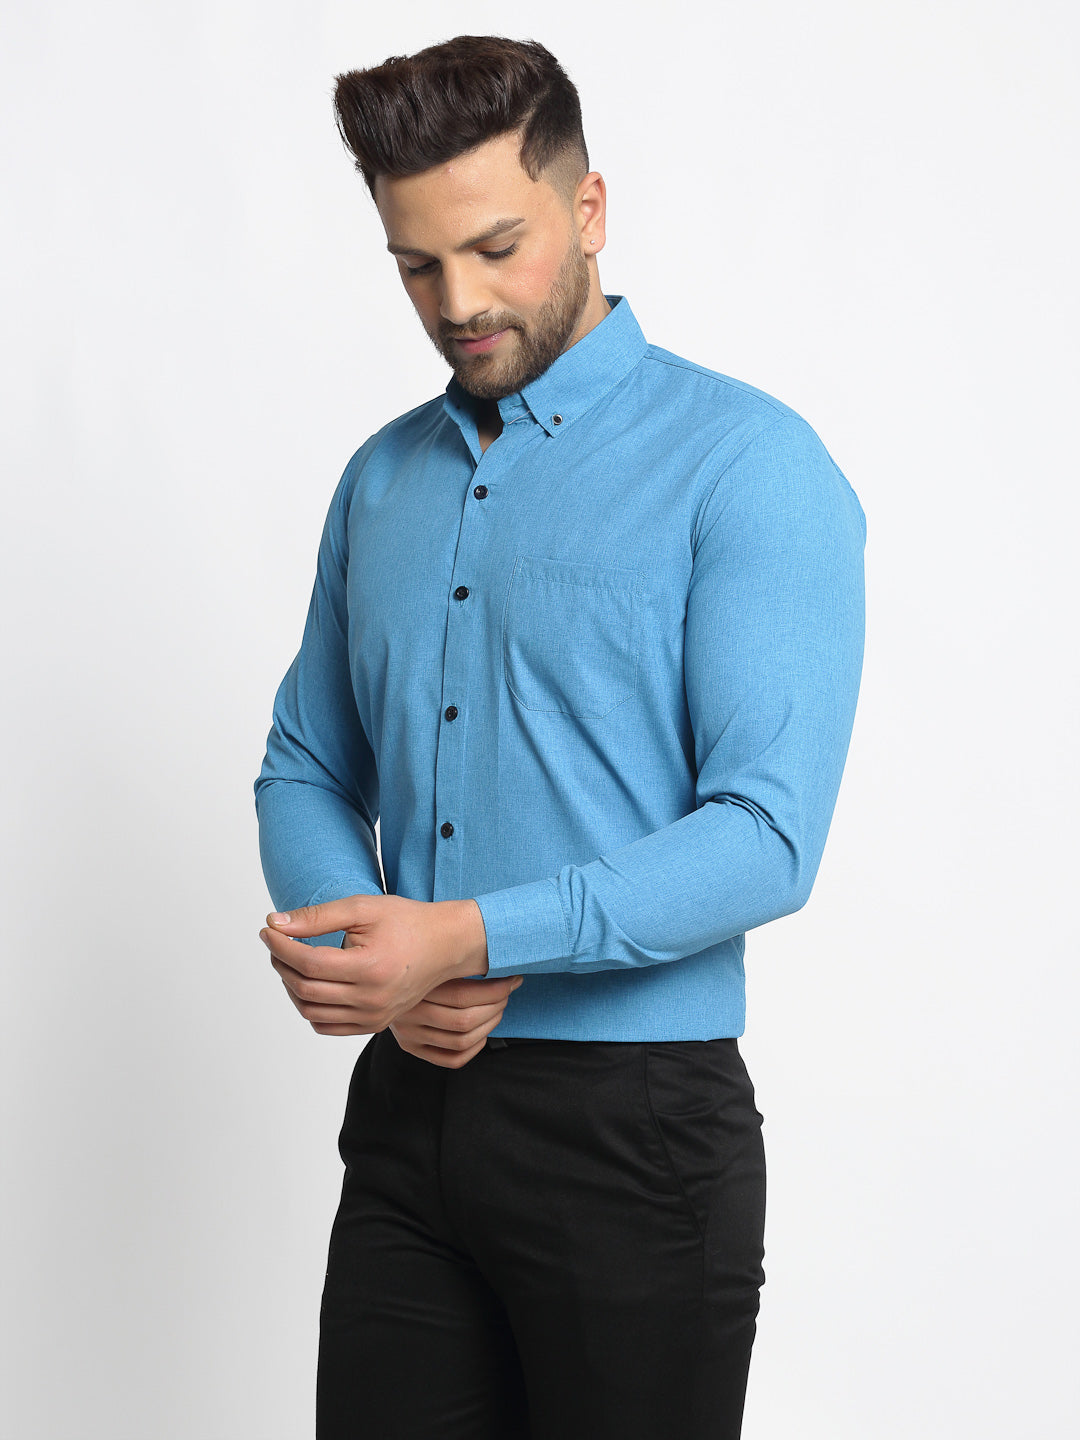 Men's Blue Cotton Solid Button Down Formal Shirts ( SF 734Sky ) - Jainish